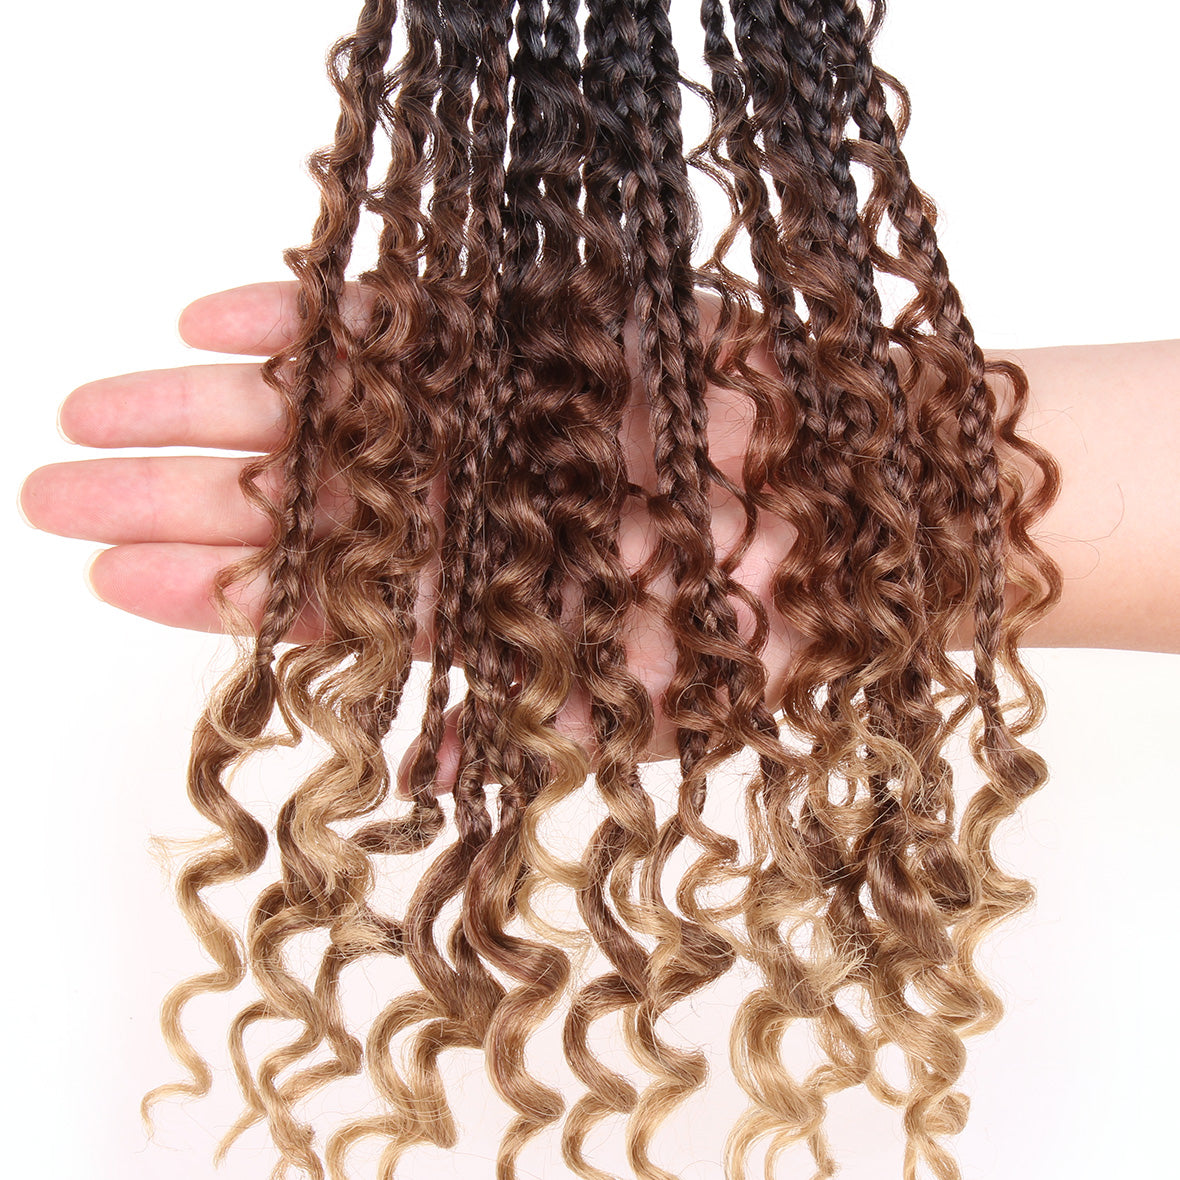 Bohemian ombre set – Dreads Curls Braids. Brown & Blonde. Boho jewelry